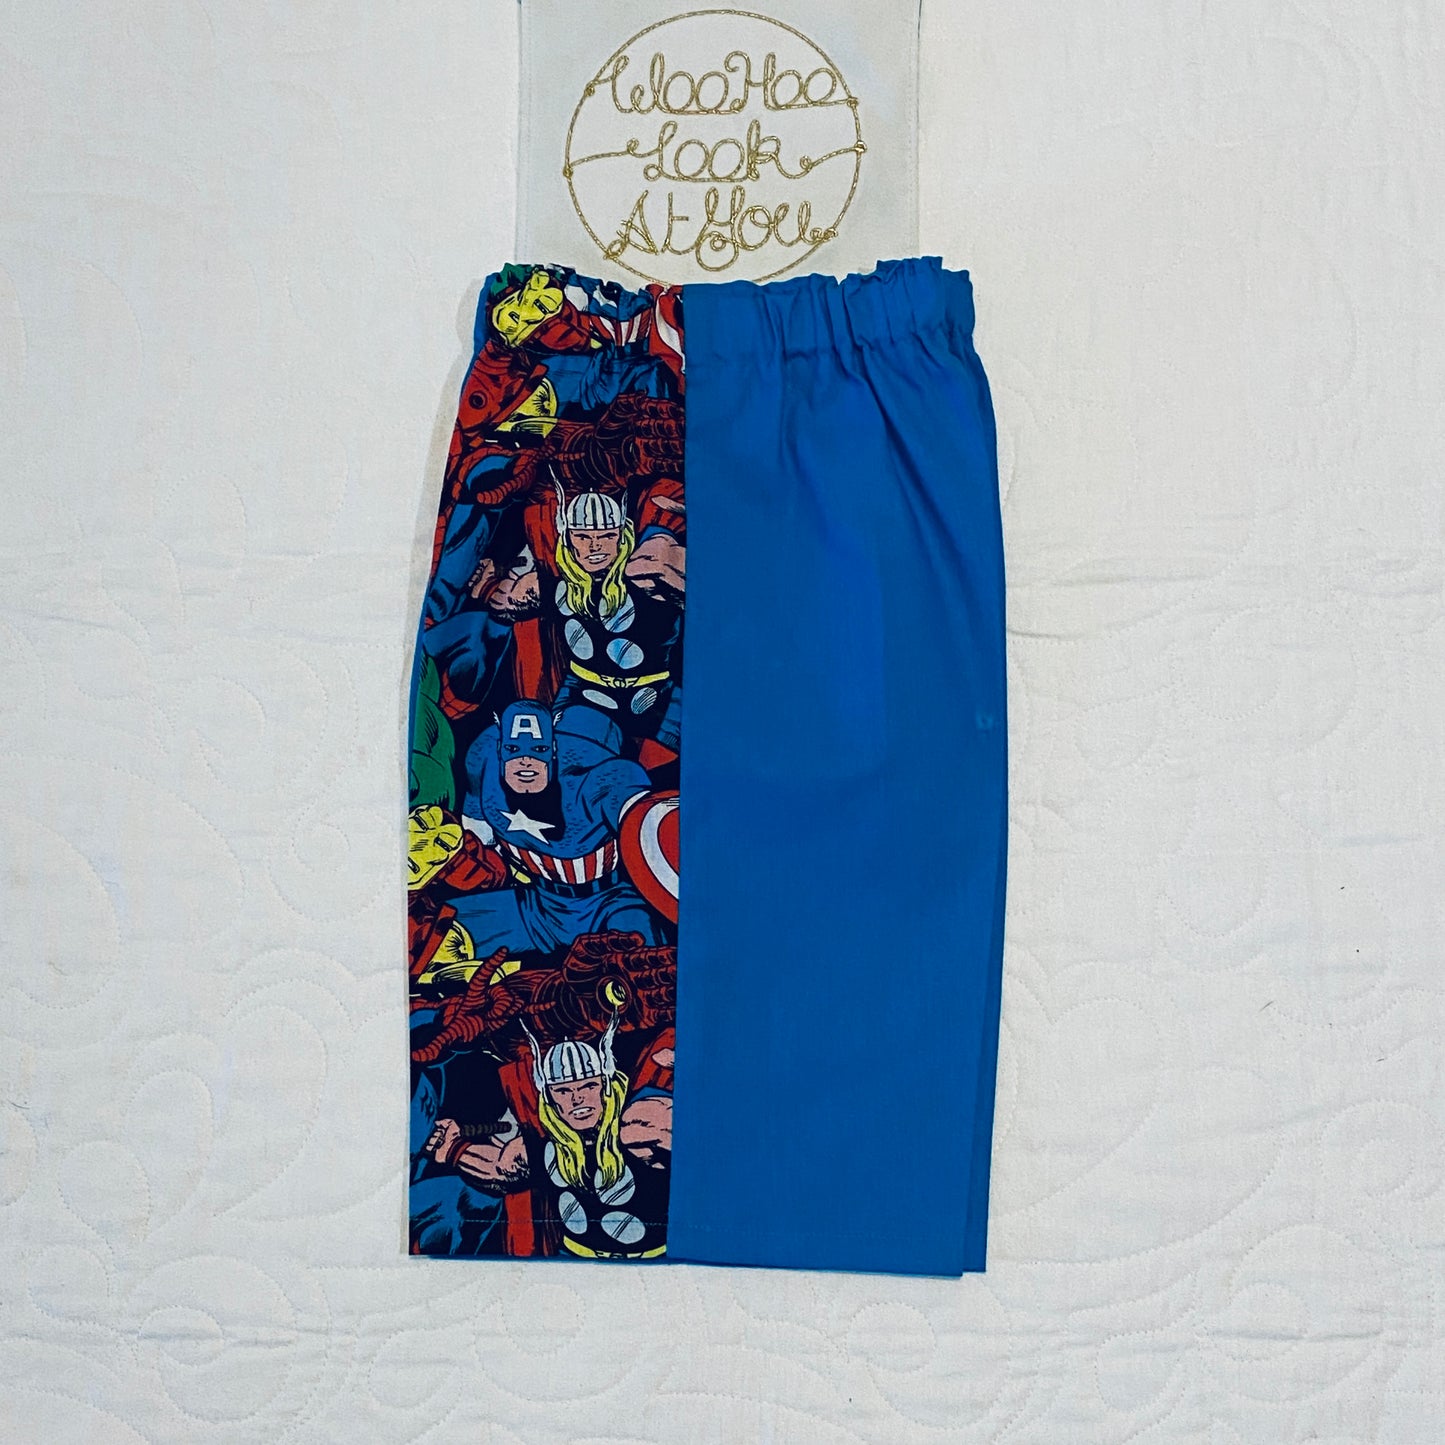 Pants - Cargo Shorts - Cobalt Blue with Action Figures, Flap Pocket for Rocks, Elastic Waist